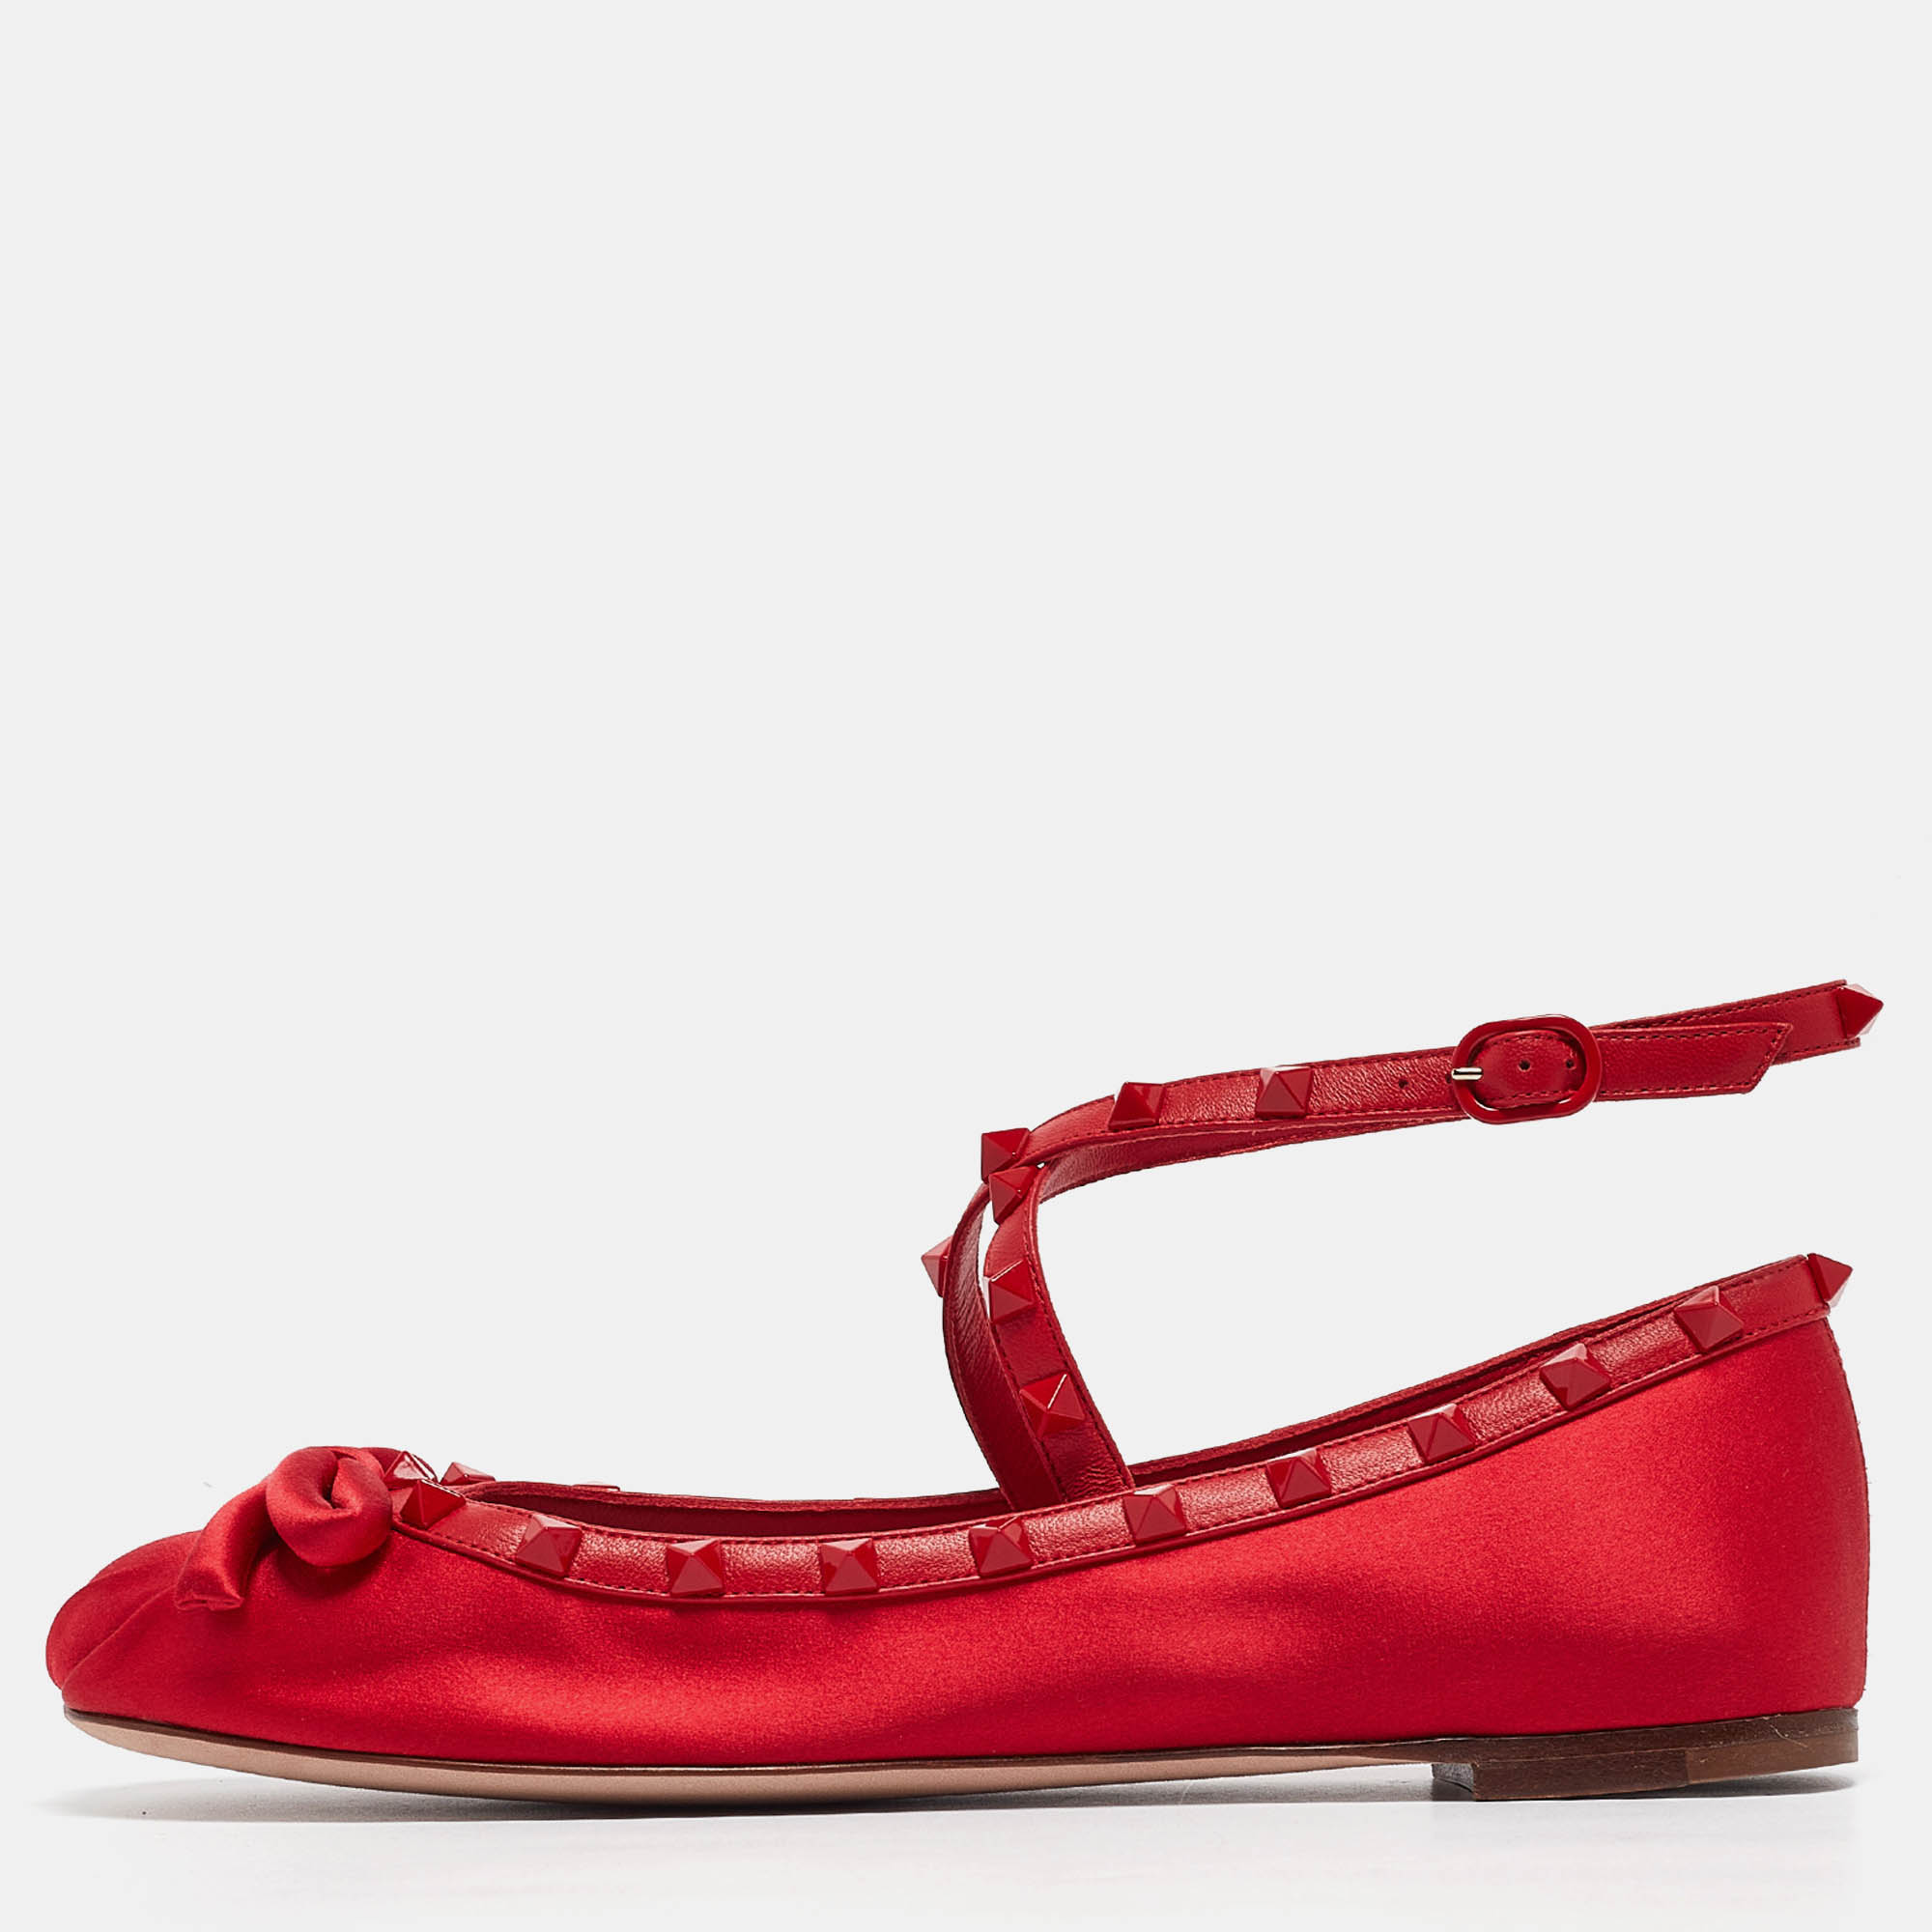 Valentino red satin rockstud ankle strap ballet flats size 39.5